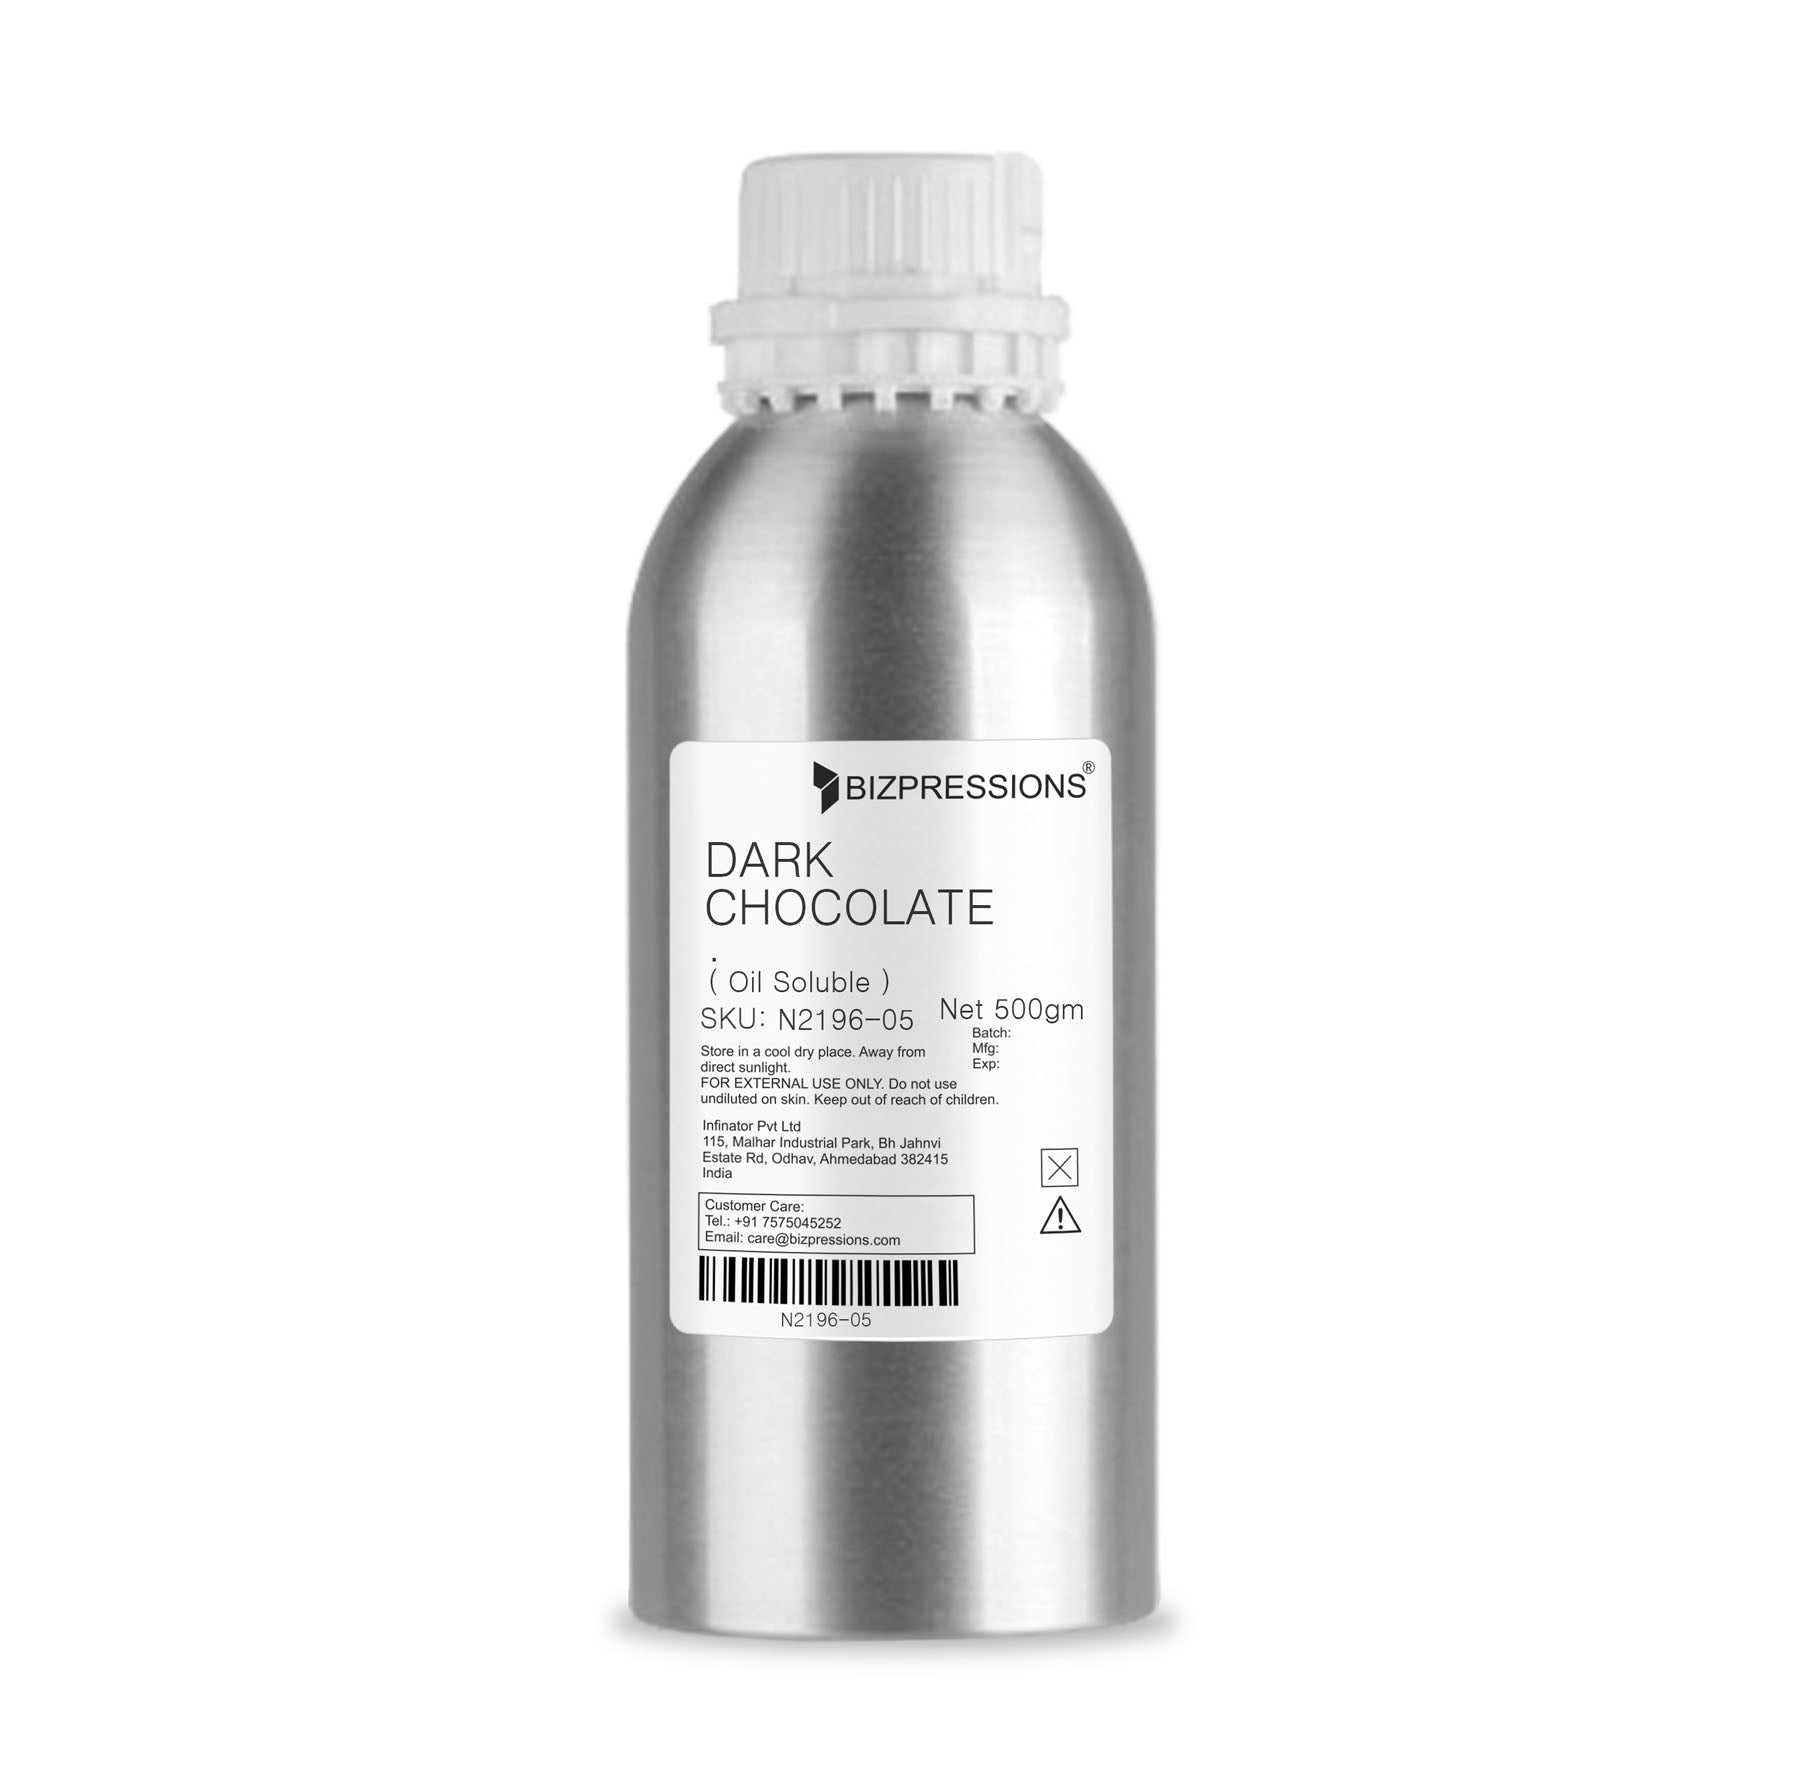 DARK CHOCOLATE - Fragrance ( Oil Soluble ) - 500 gm